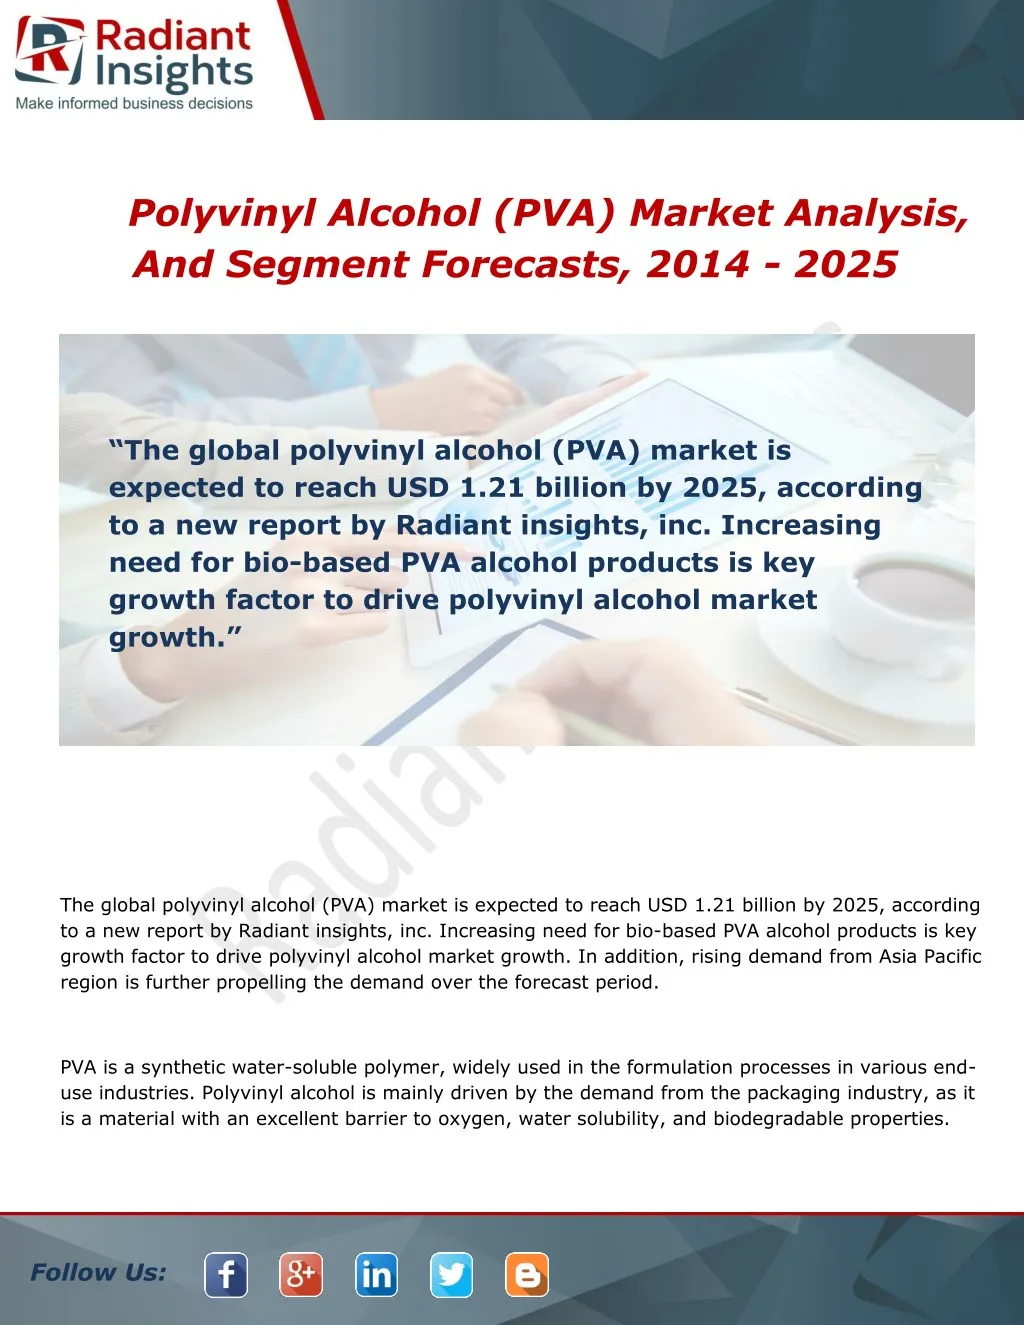 polyvinyl alcohol pva market analysis and segment